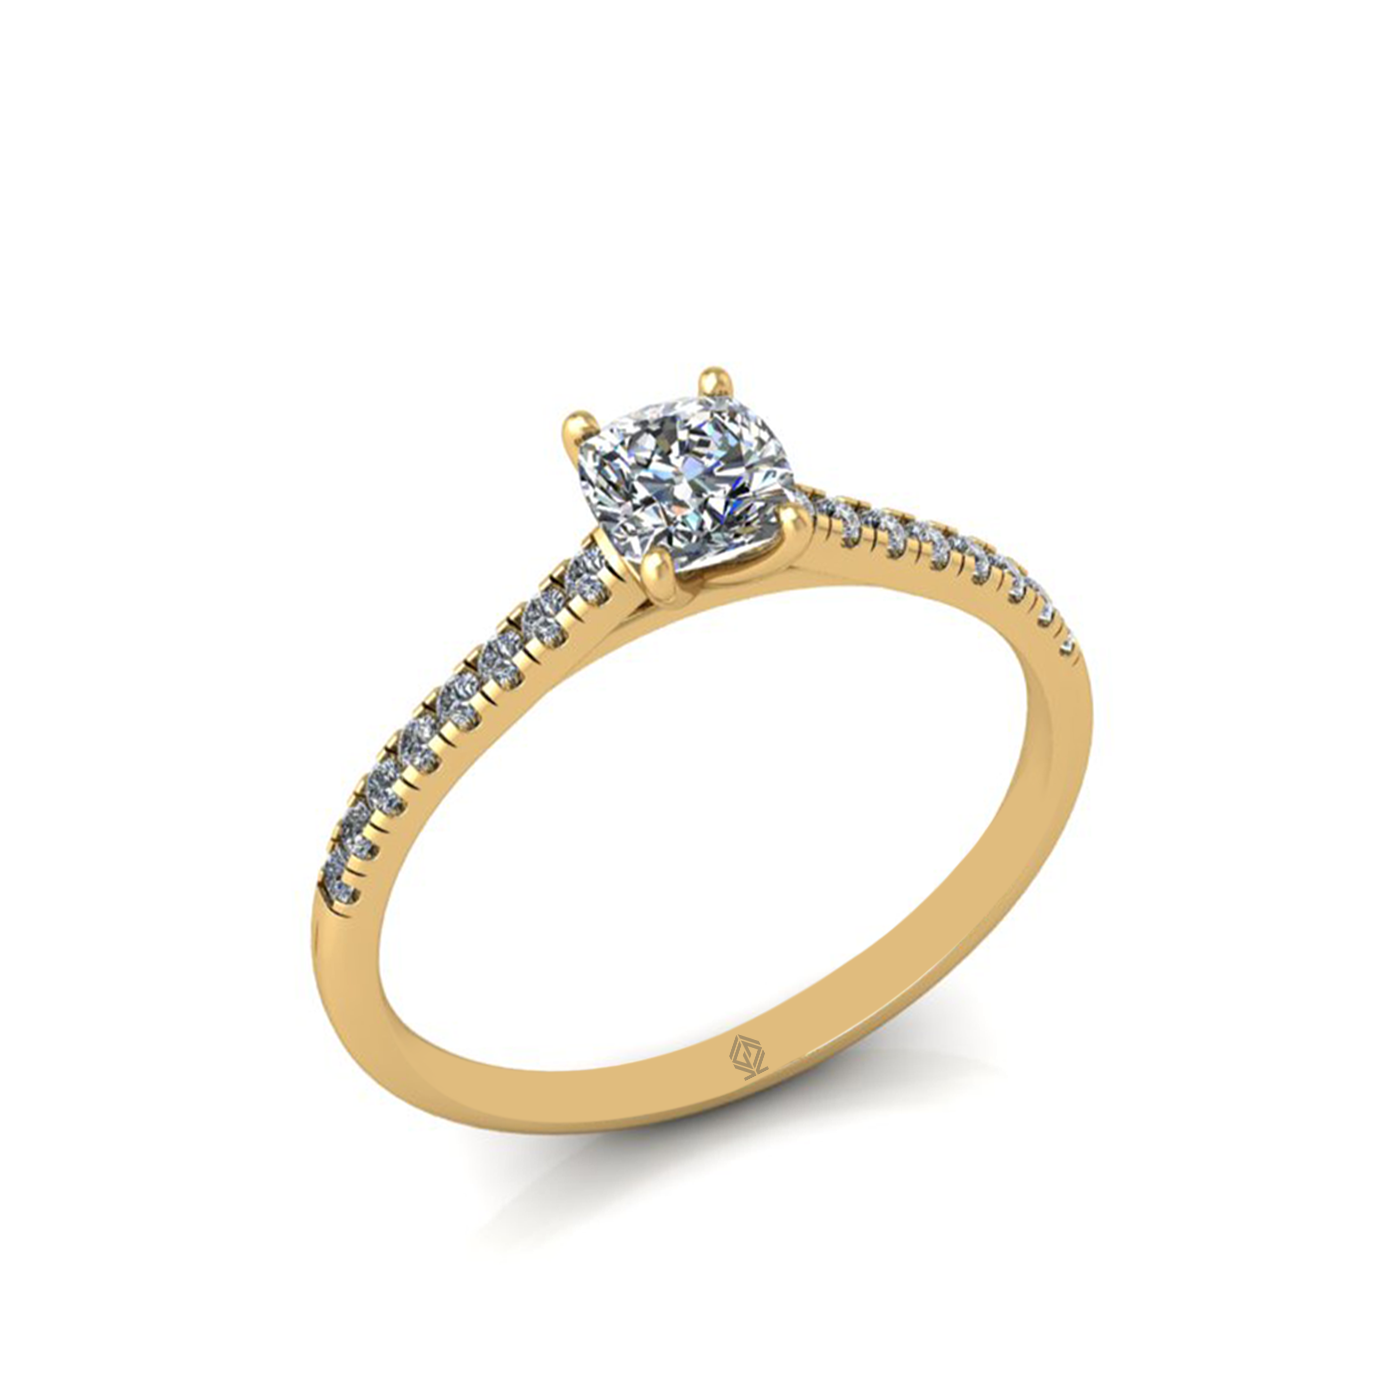 18k yellow gold  0,50 ct 4 prongs cushion cut diamond engagement ring with whisper thin pavÉ set band